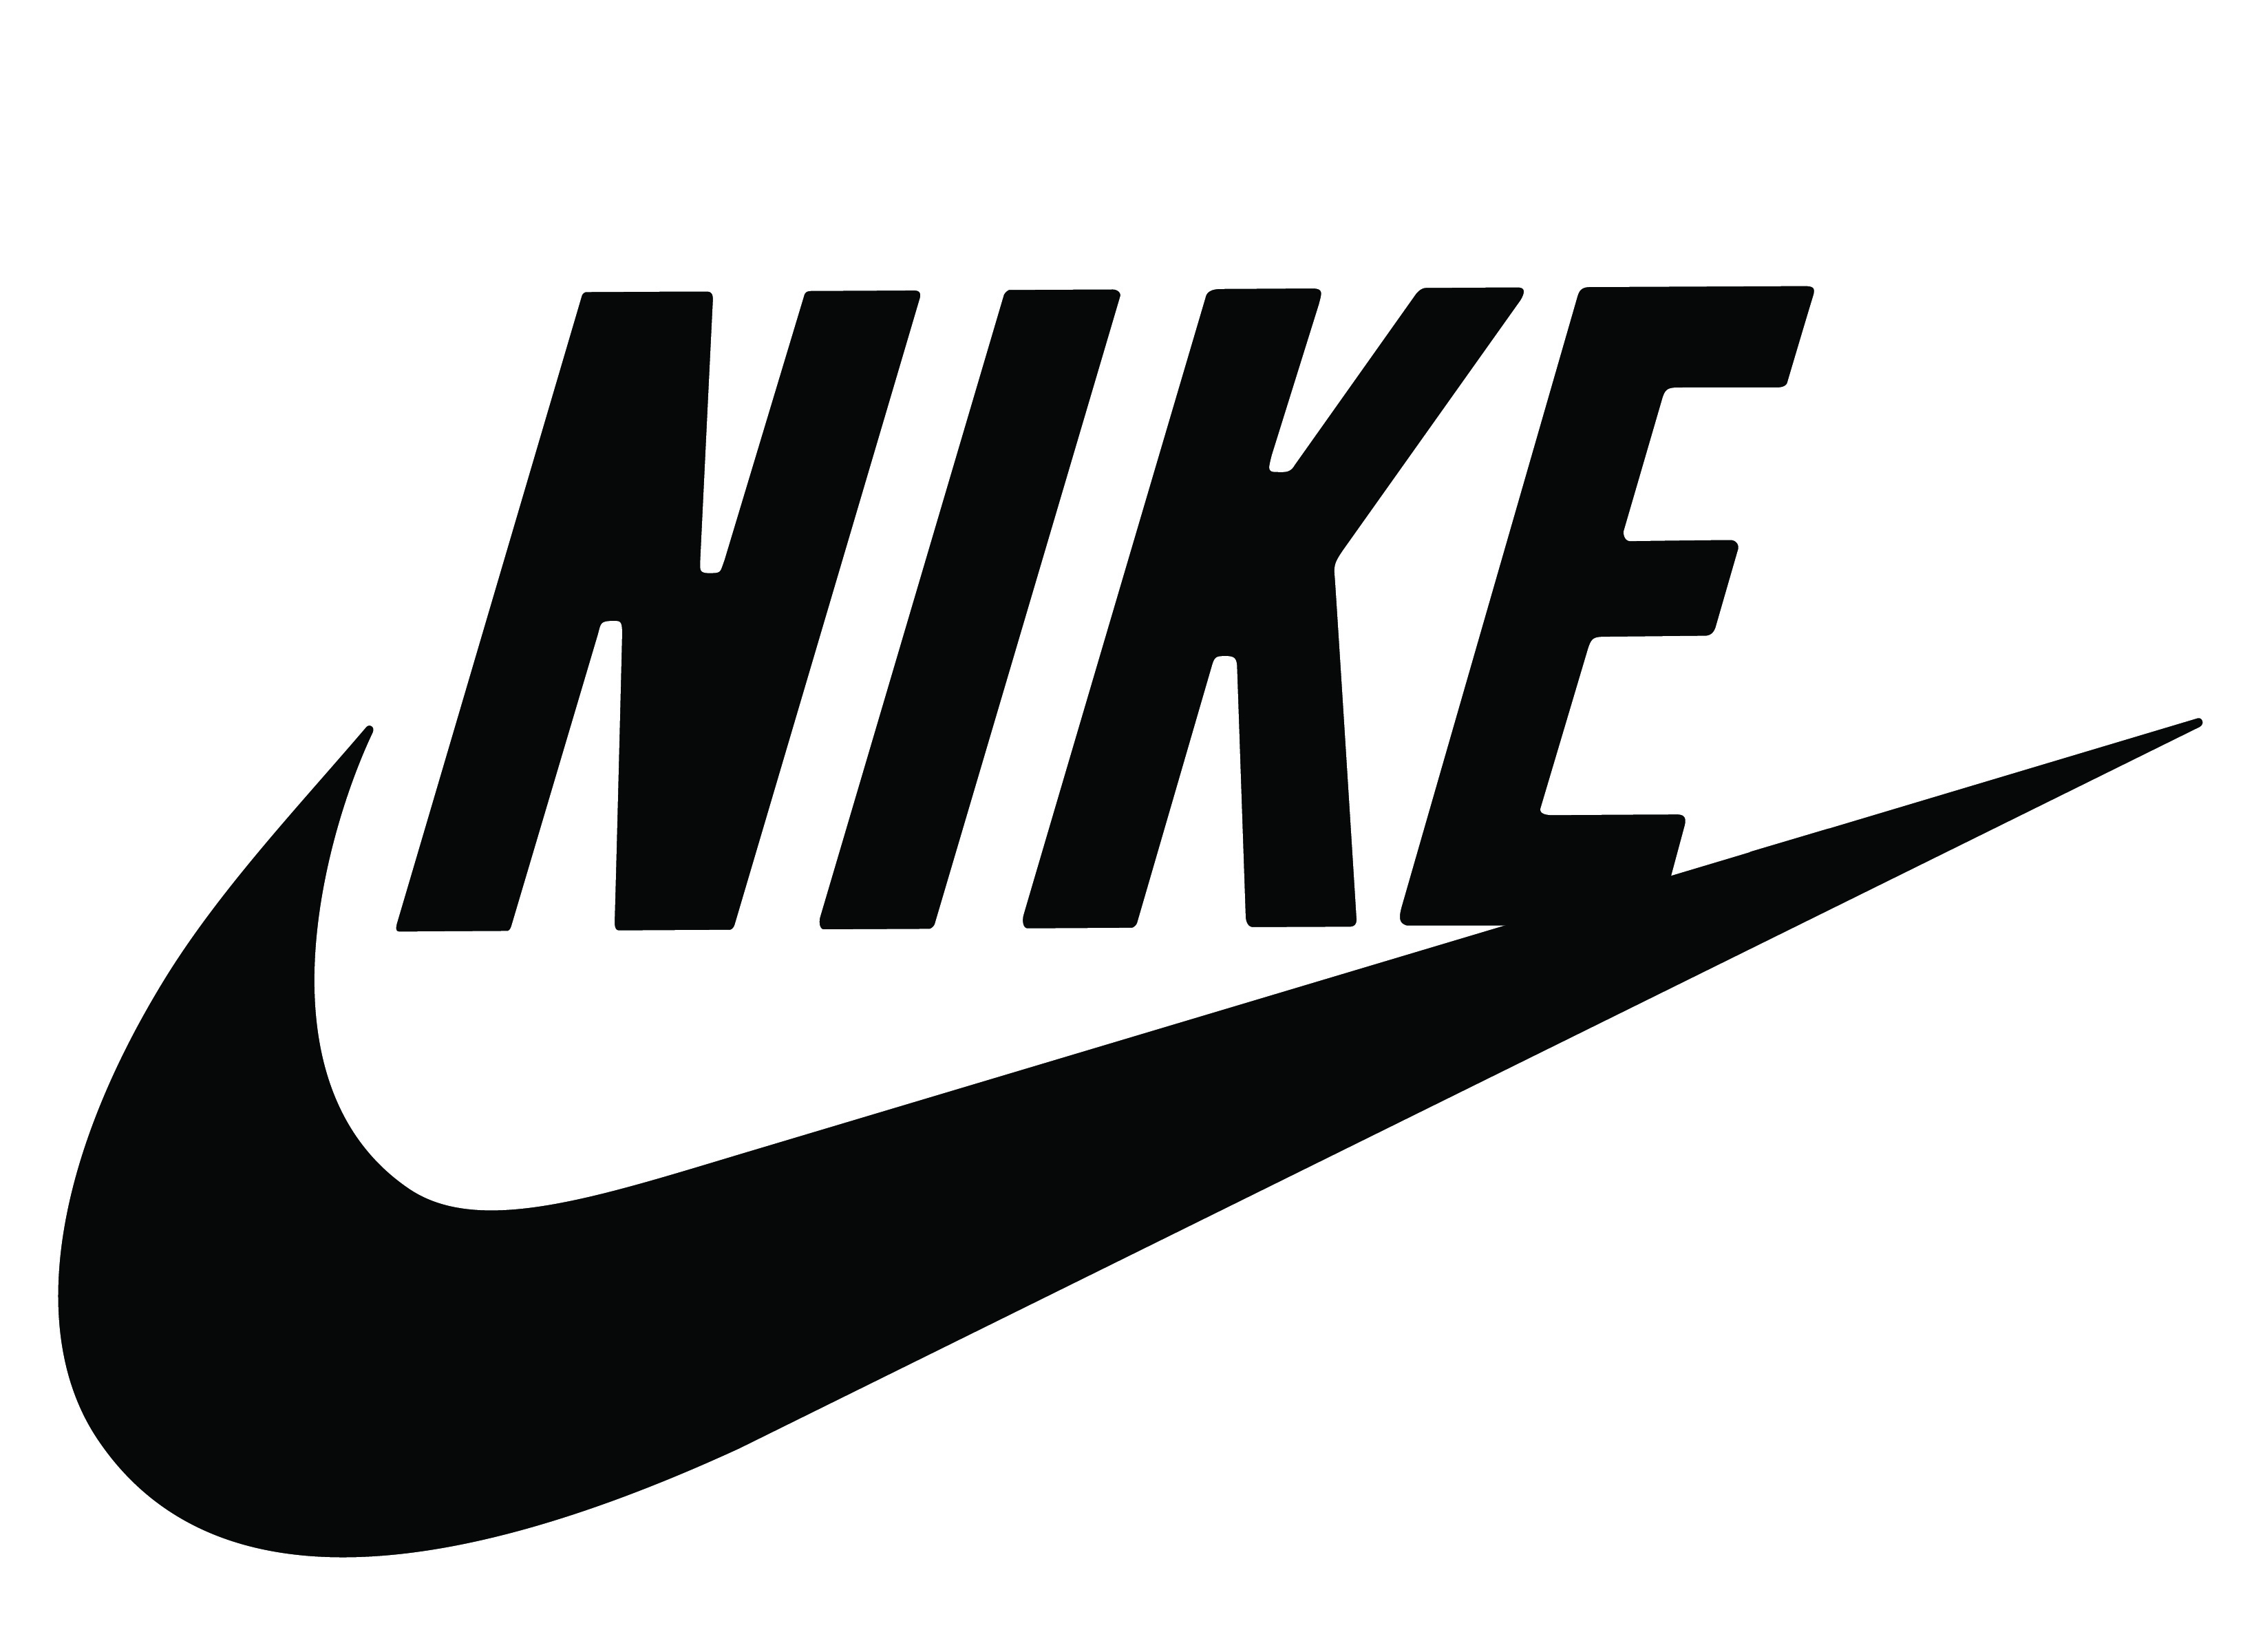 Nike Brand Wallpaper